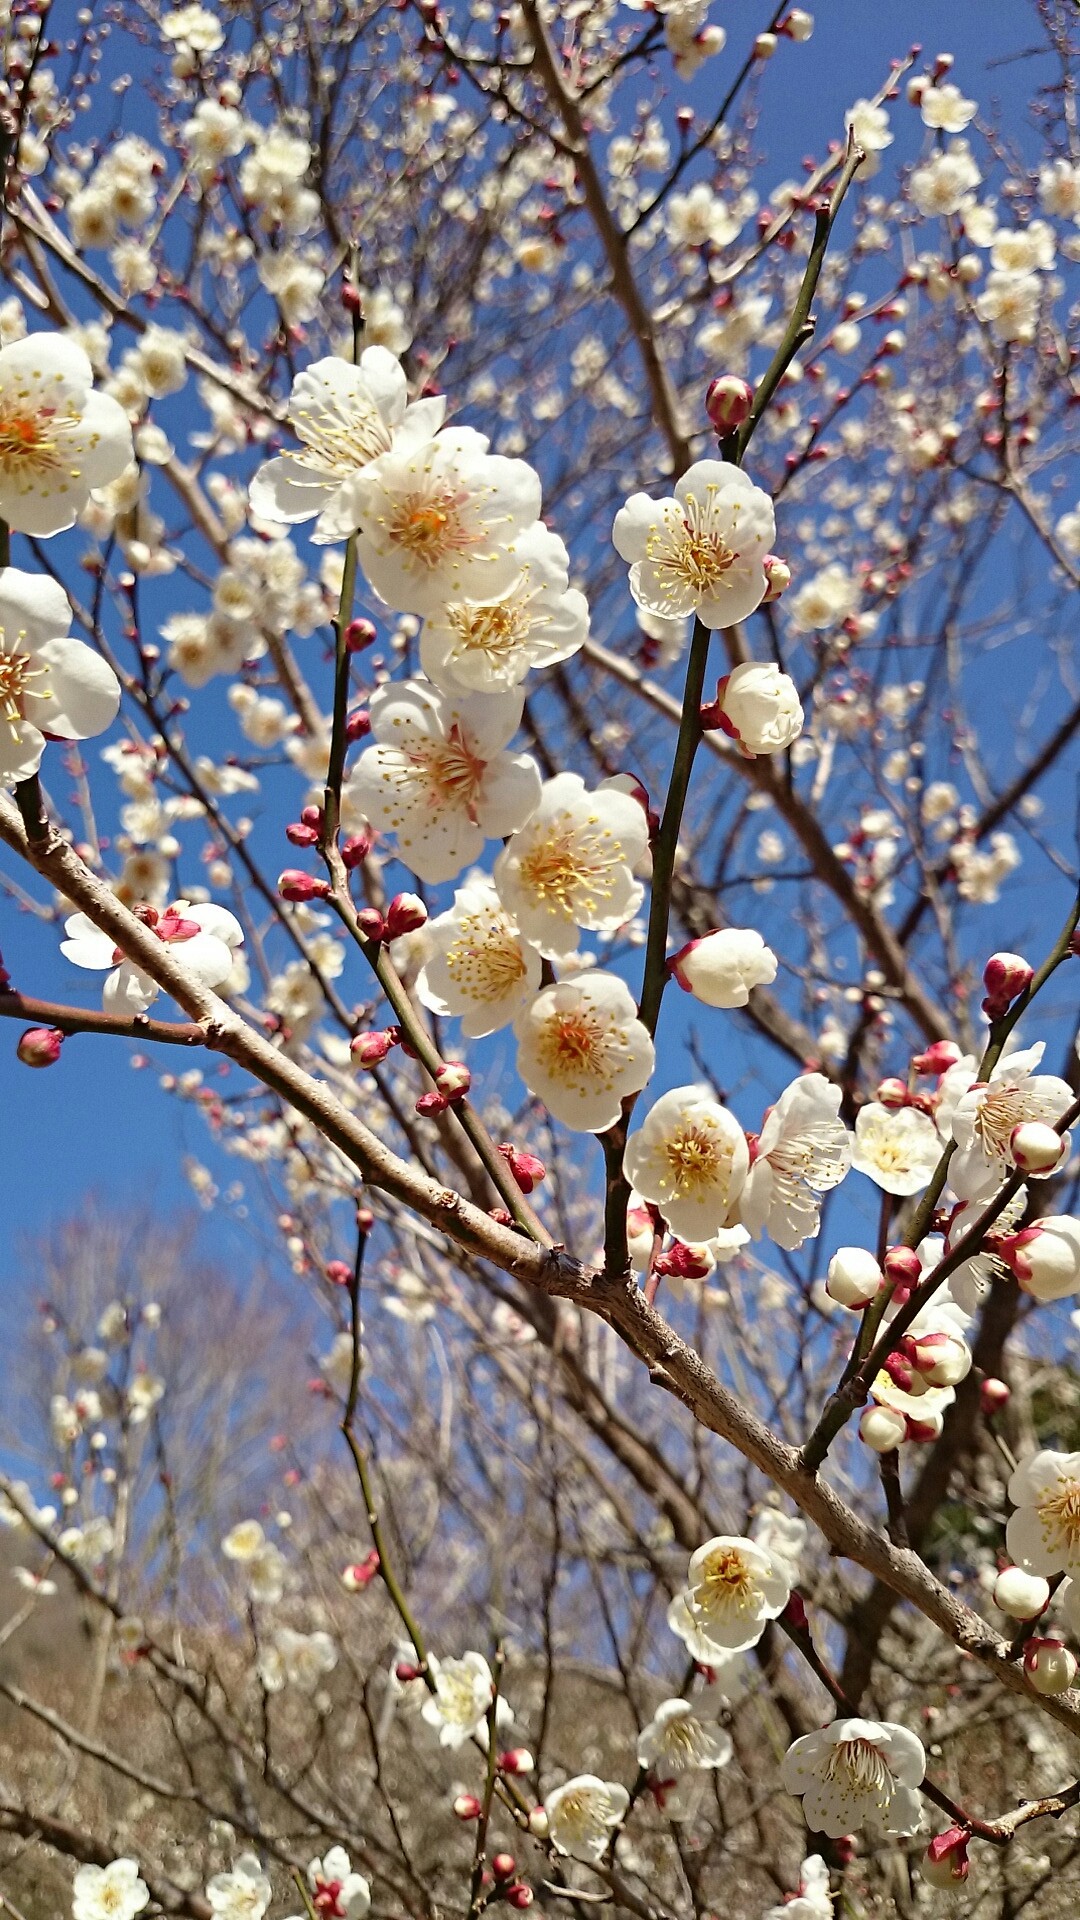 Prunus mume Cuidados (Como Cuidar, Doenças, Podar) - PictureThis